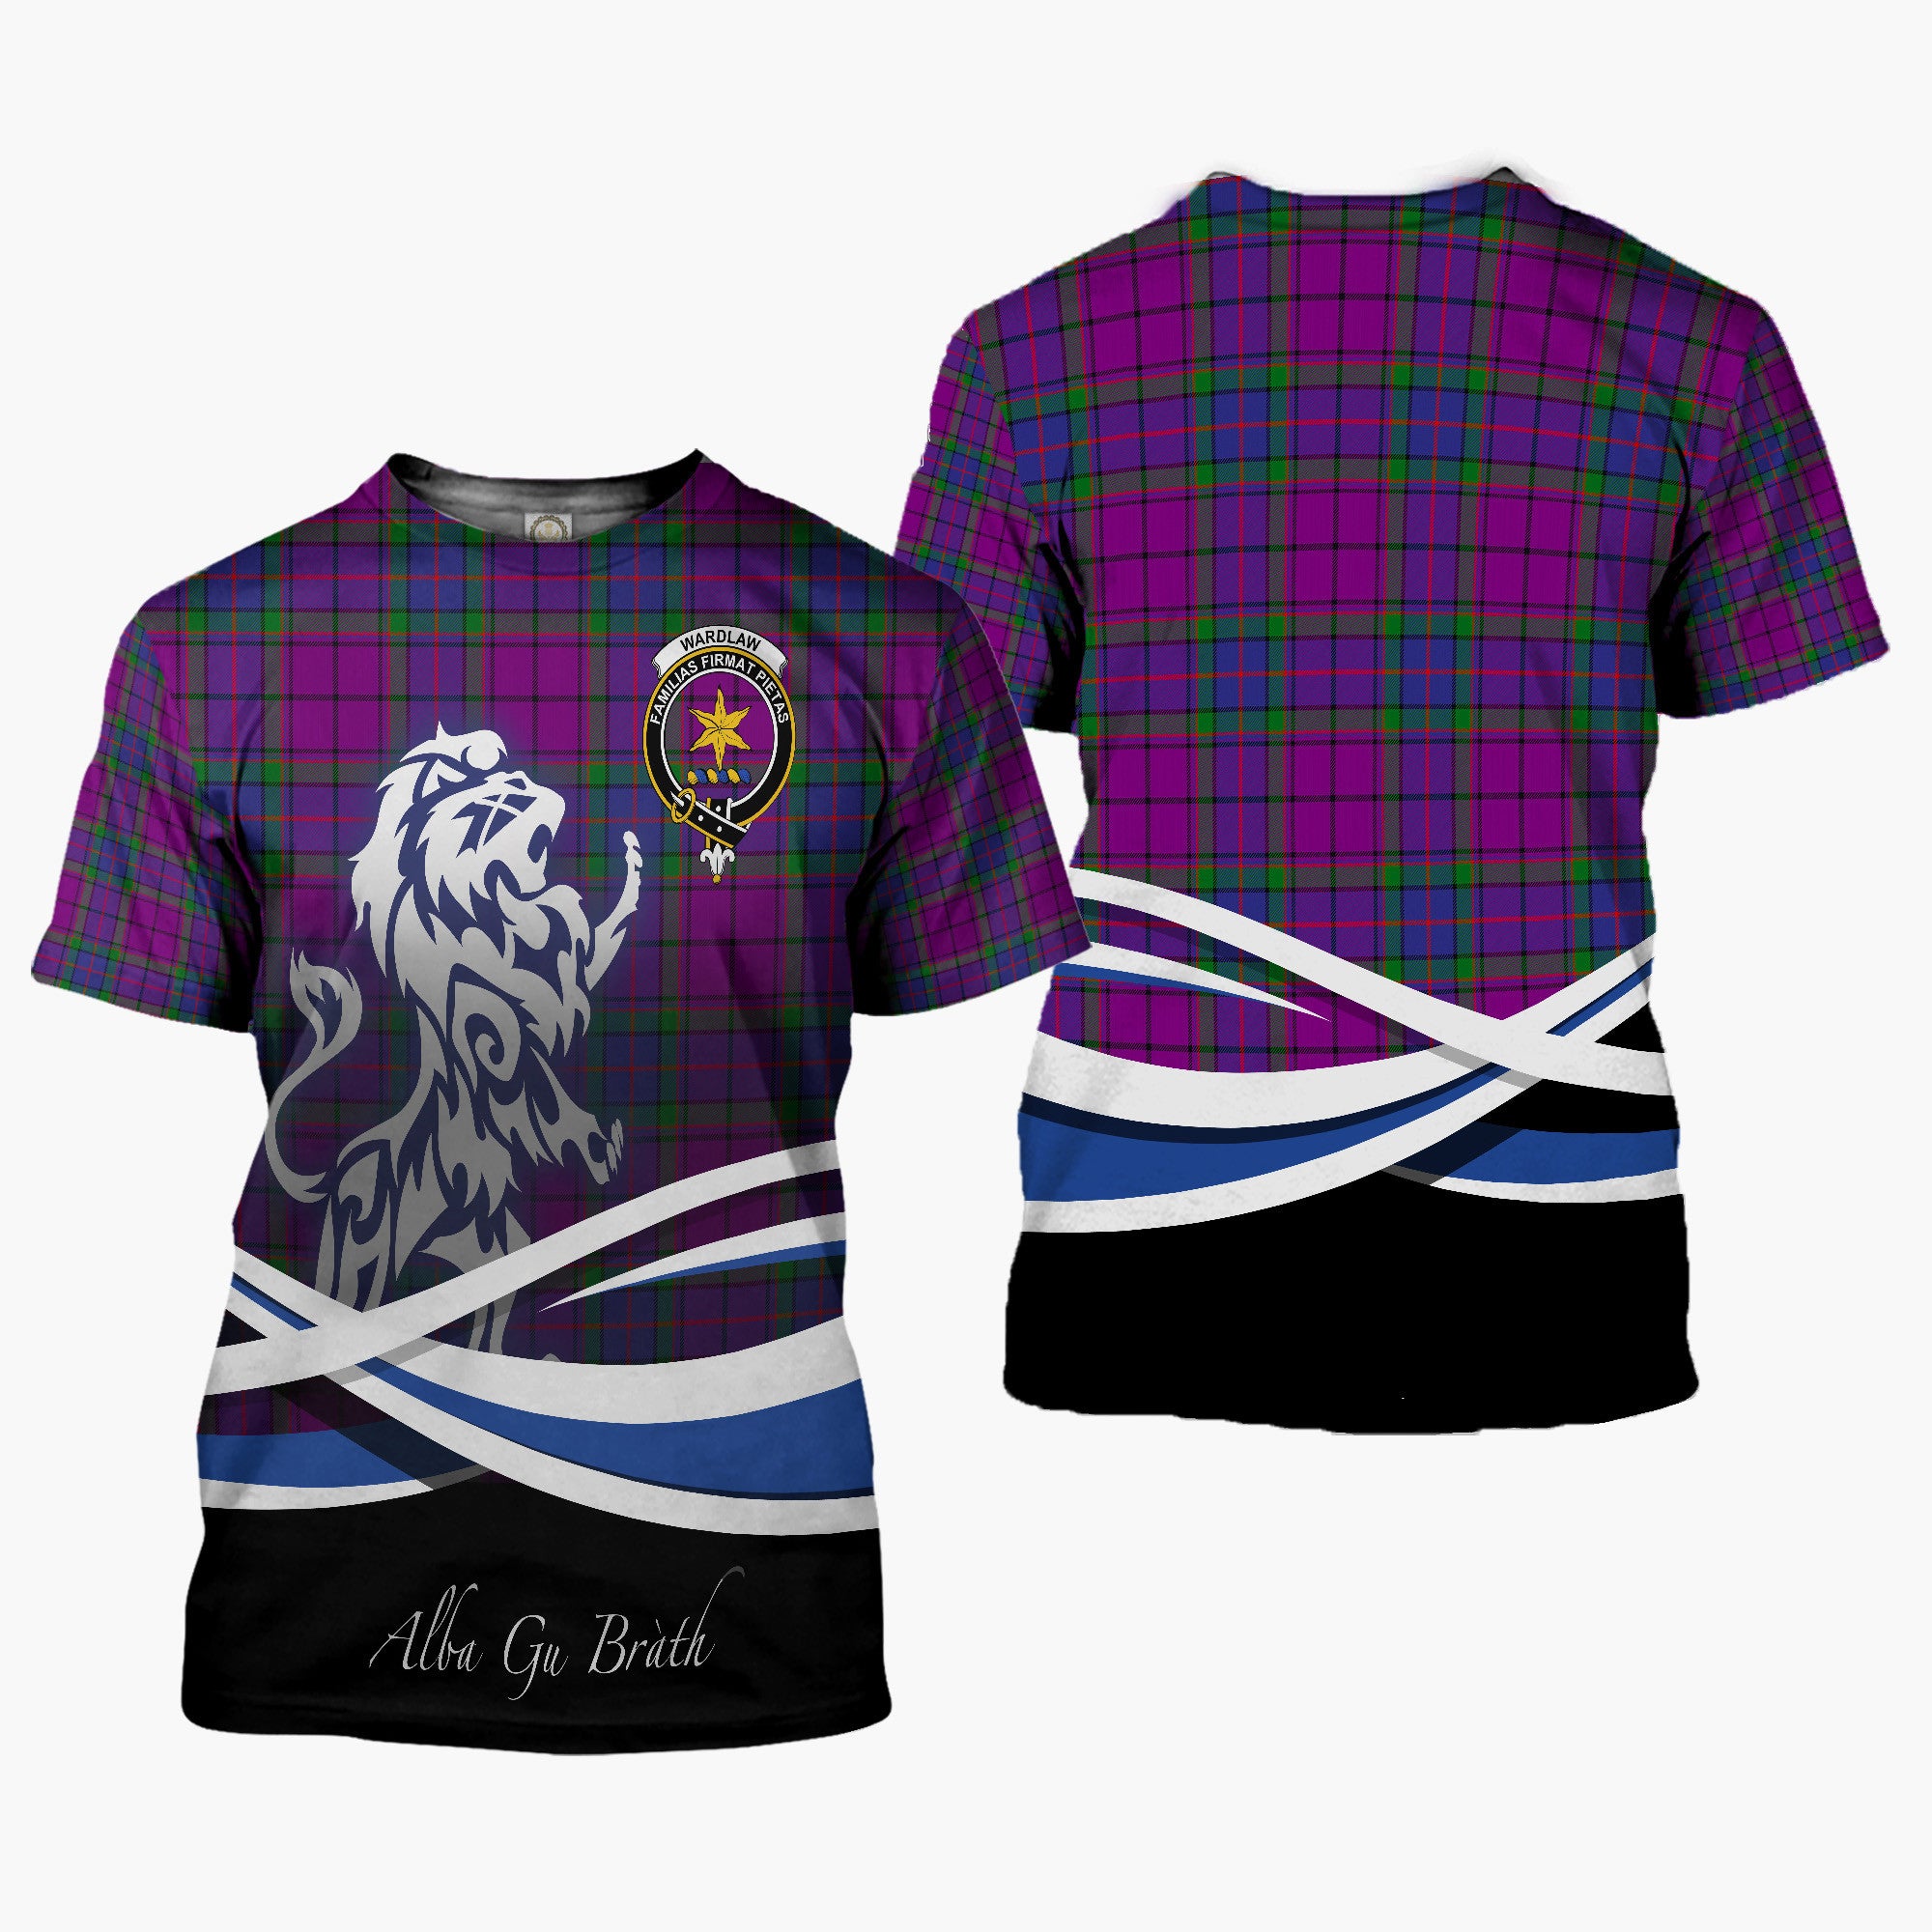 wardlaw-clan-crest-alba-gu-brath-t-shirt-scotland-gift